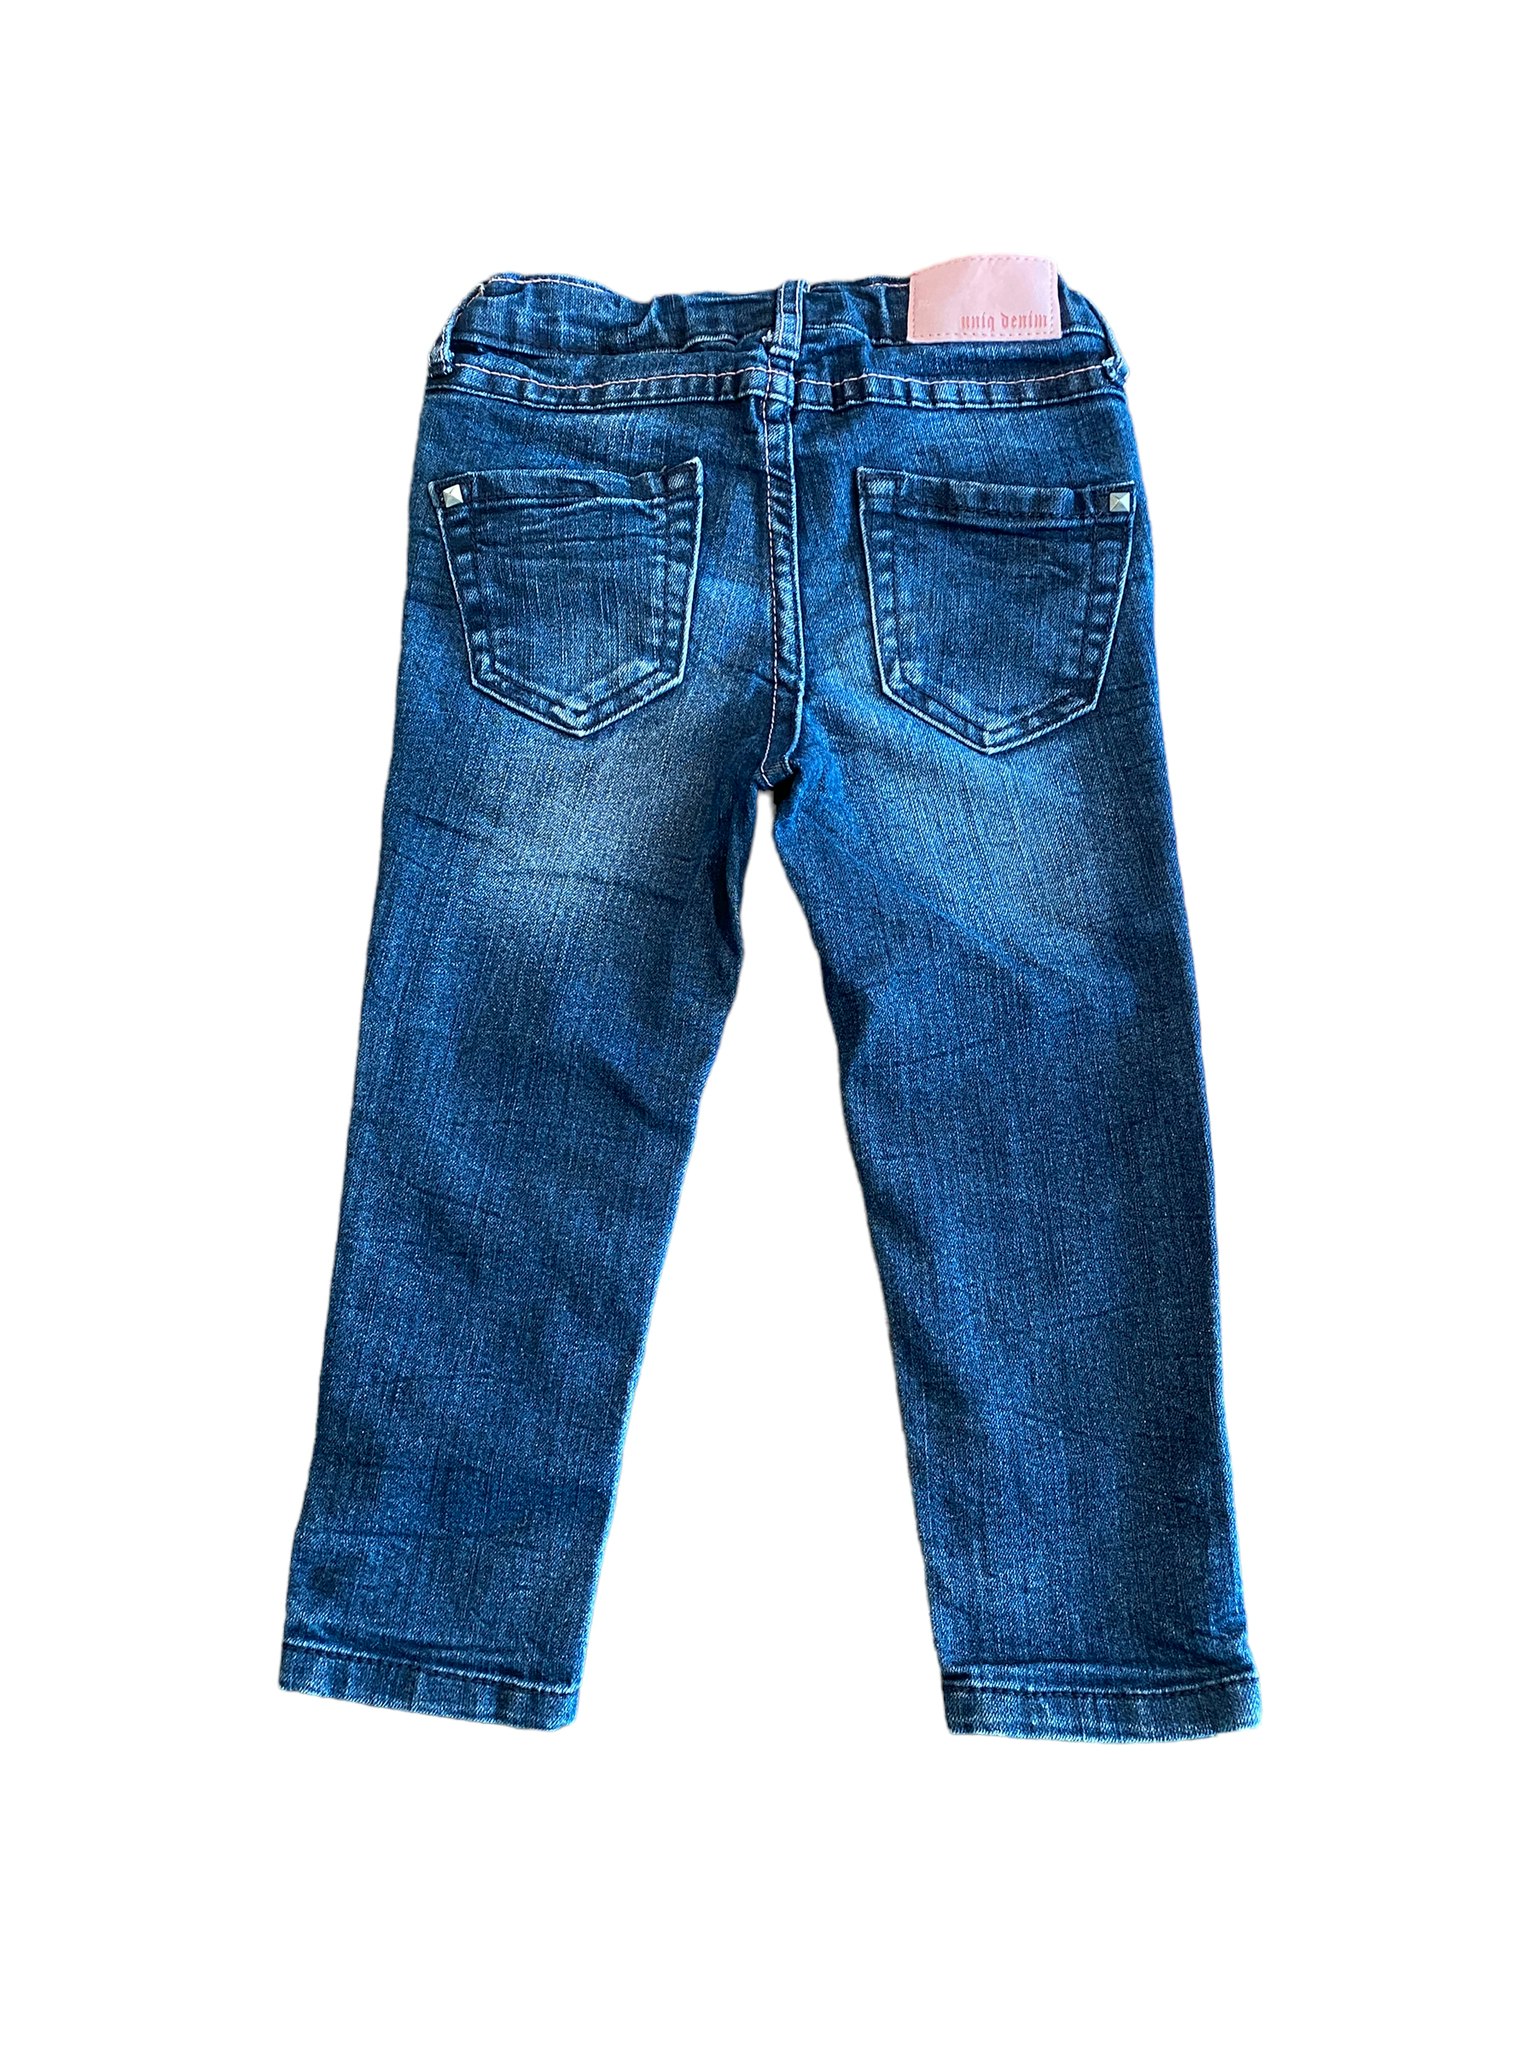 Byxor/Jeans, Uniq mini, stl 92